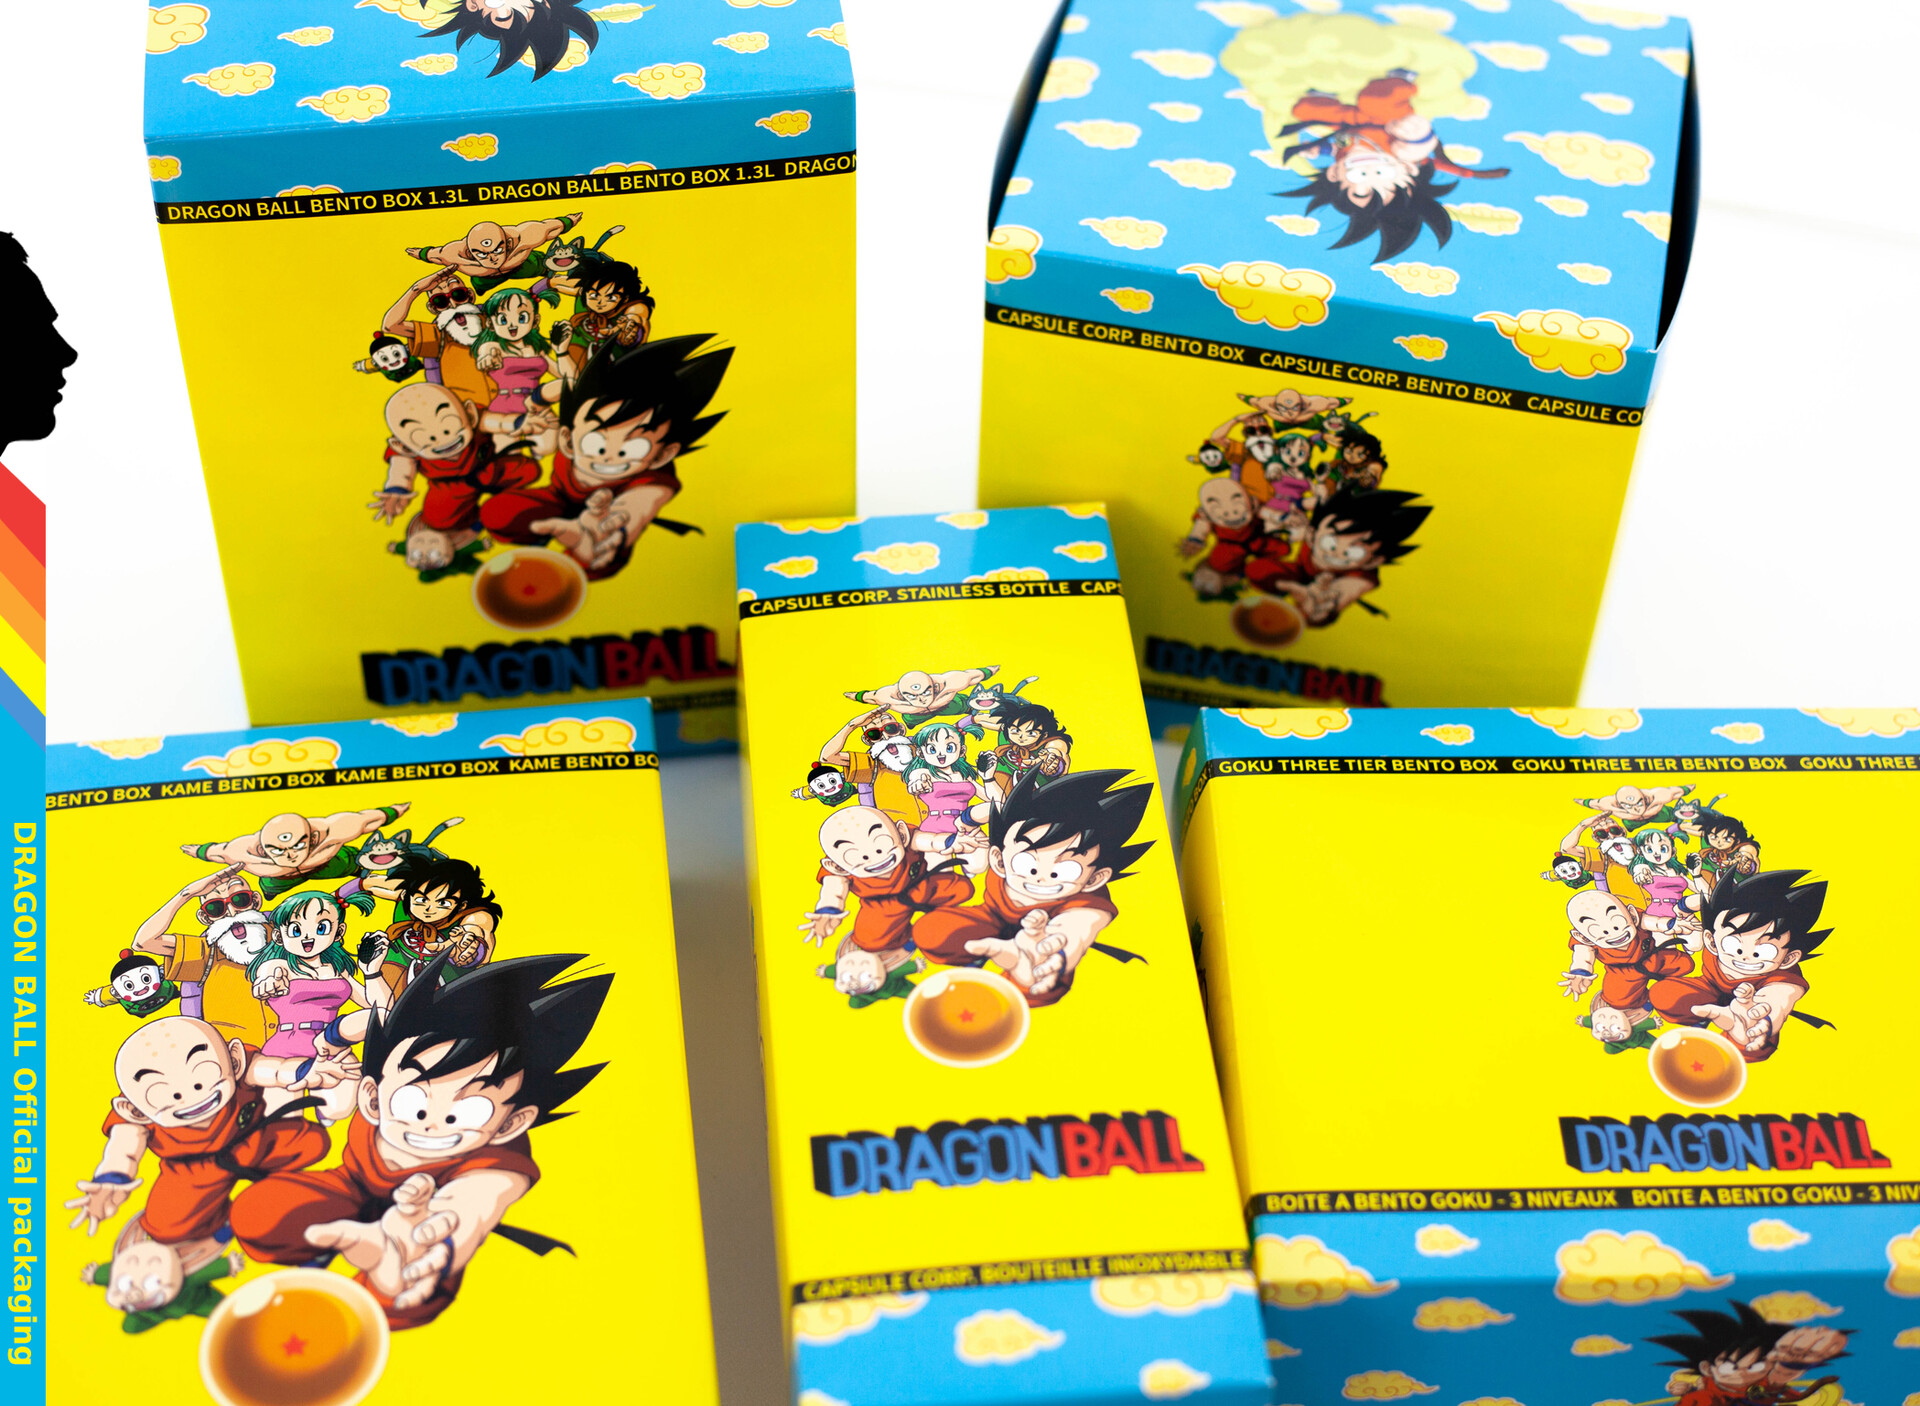 ArtStation - Dragon Ball official packaging